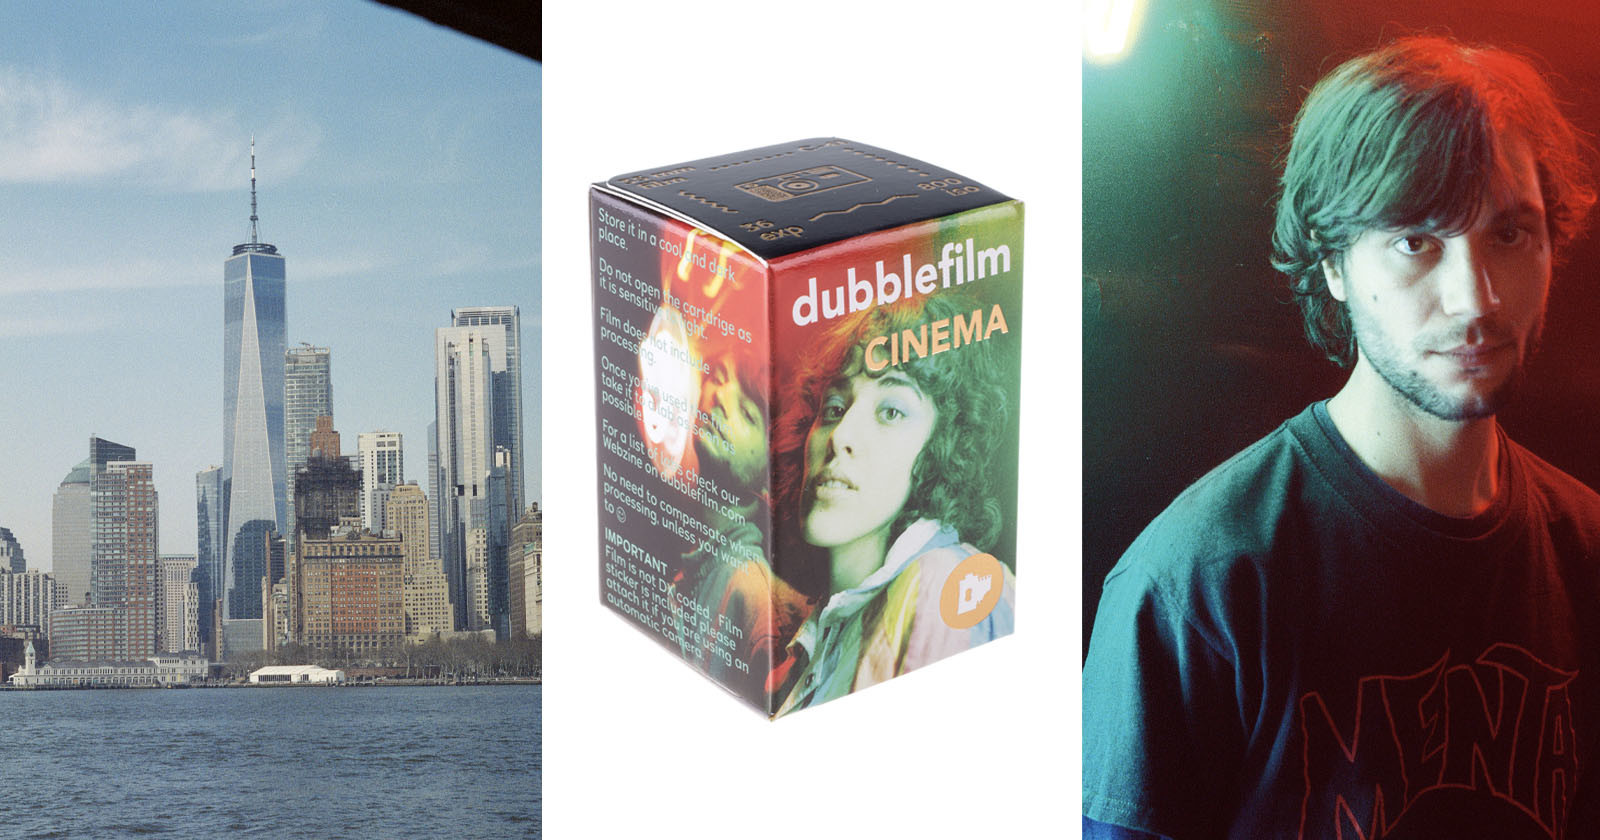 Dubblefilm CINEMA 35mm Film is Made from Repurposed Movie Film